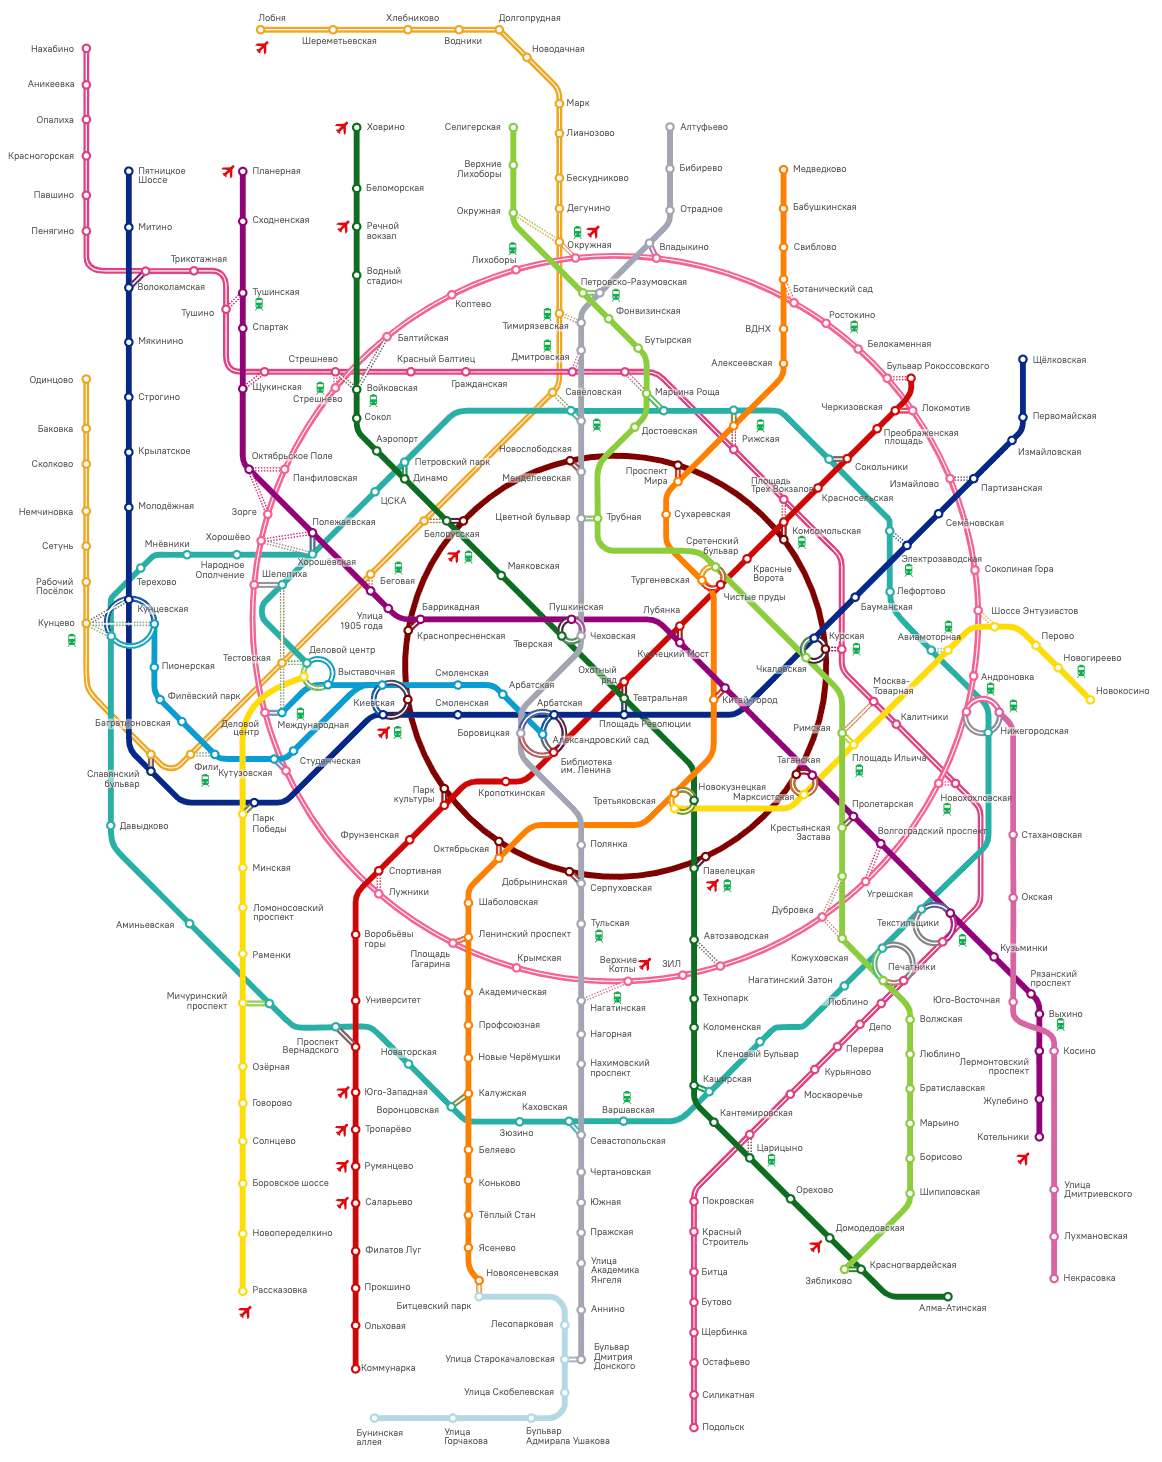 метрополитен москва схема новая